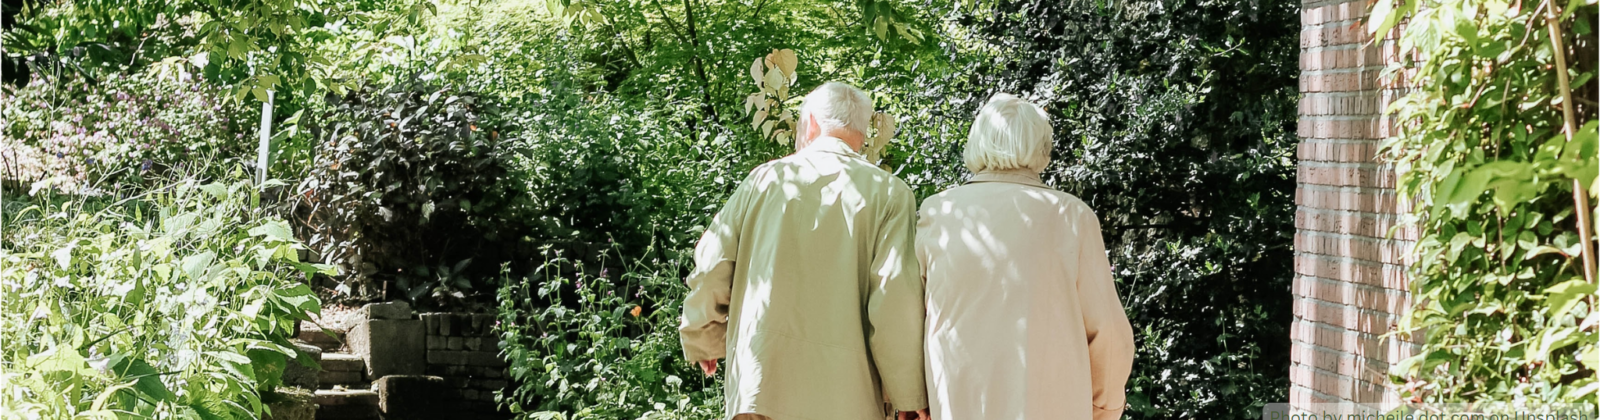 Elderly couple walking on a paved garden path.